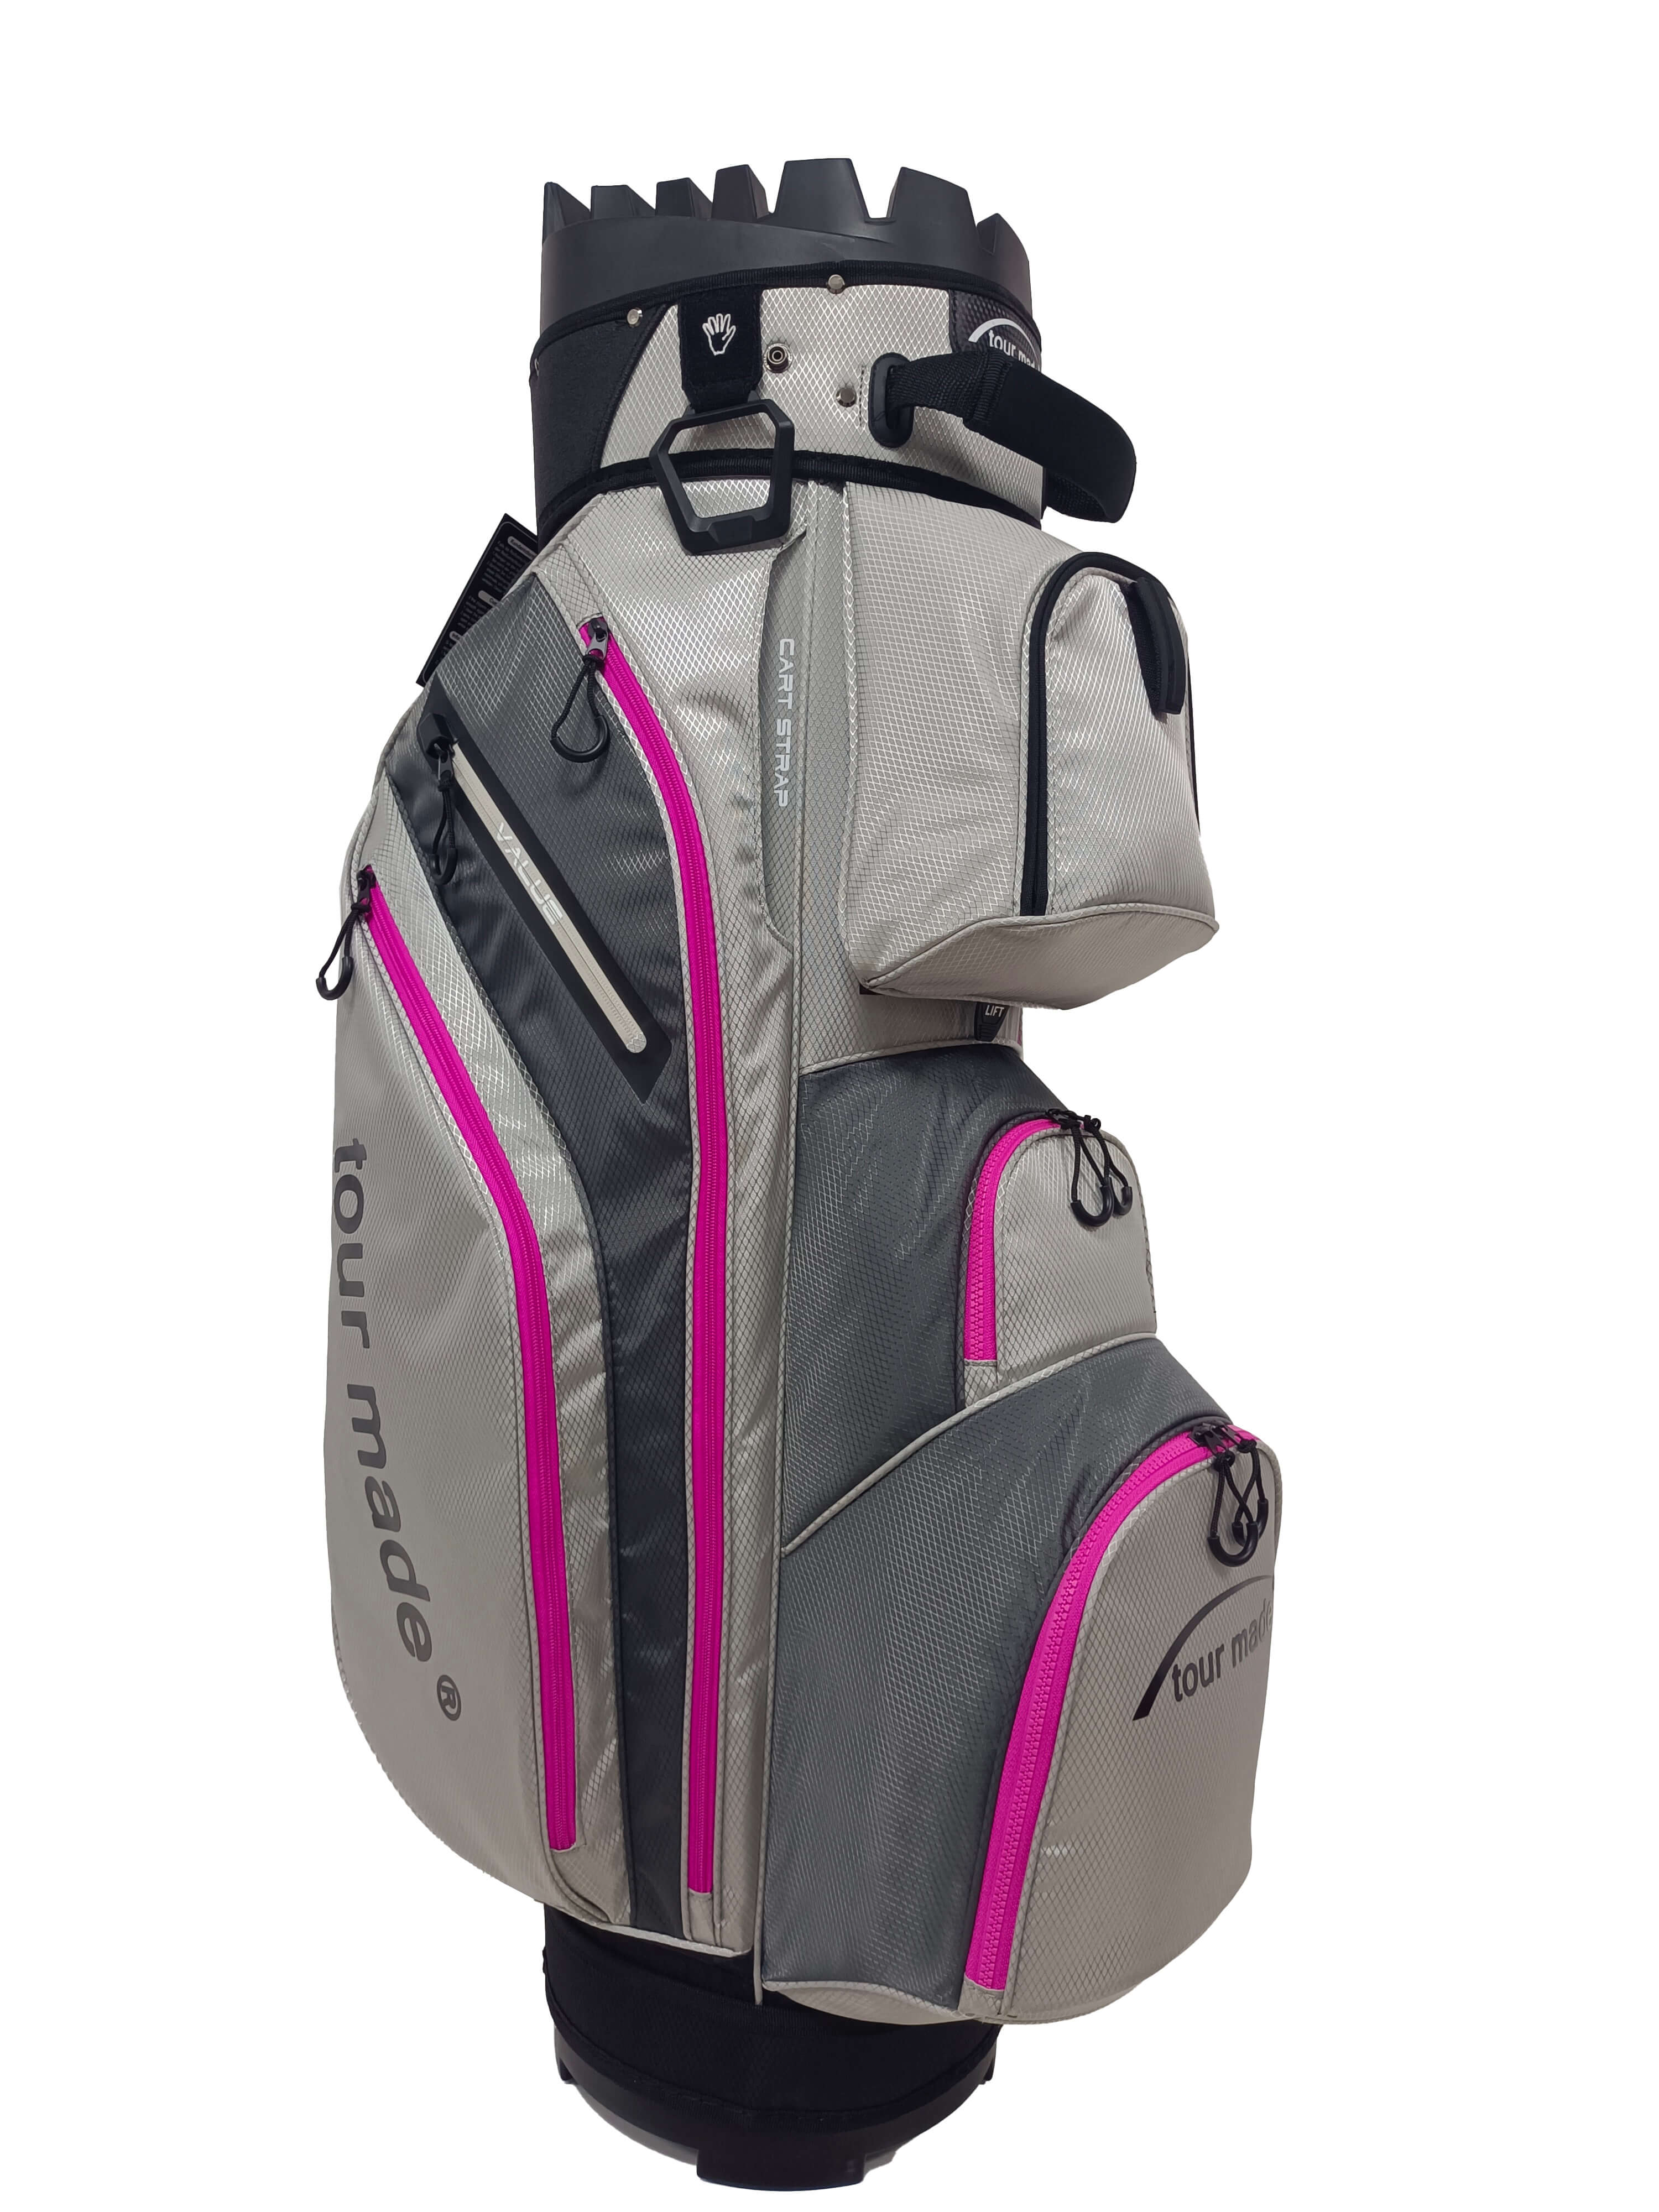 PRE-SALE tour made organiser golf bag with magnetic pocket